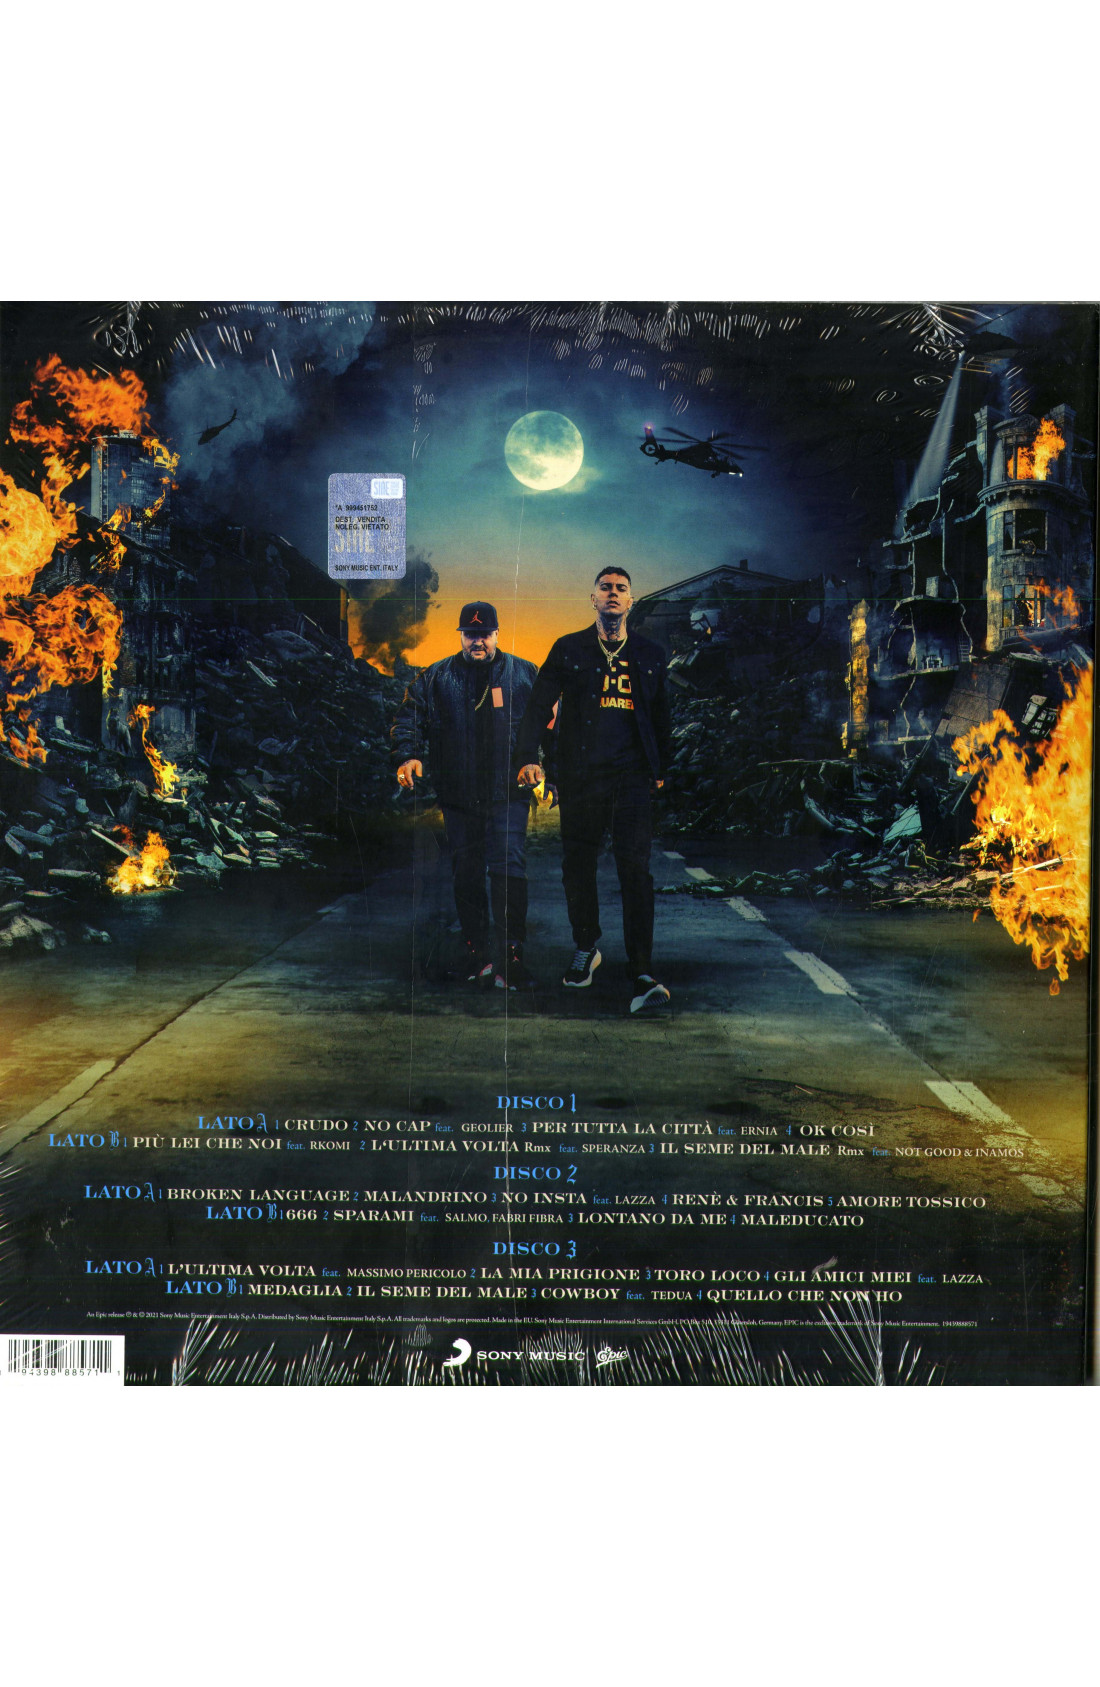 Emis Killa & Jake La Furia - 17 Dark Edition (LP) - Rap Italiano - Nuovi -  Vinili